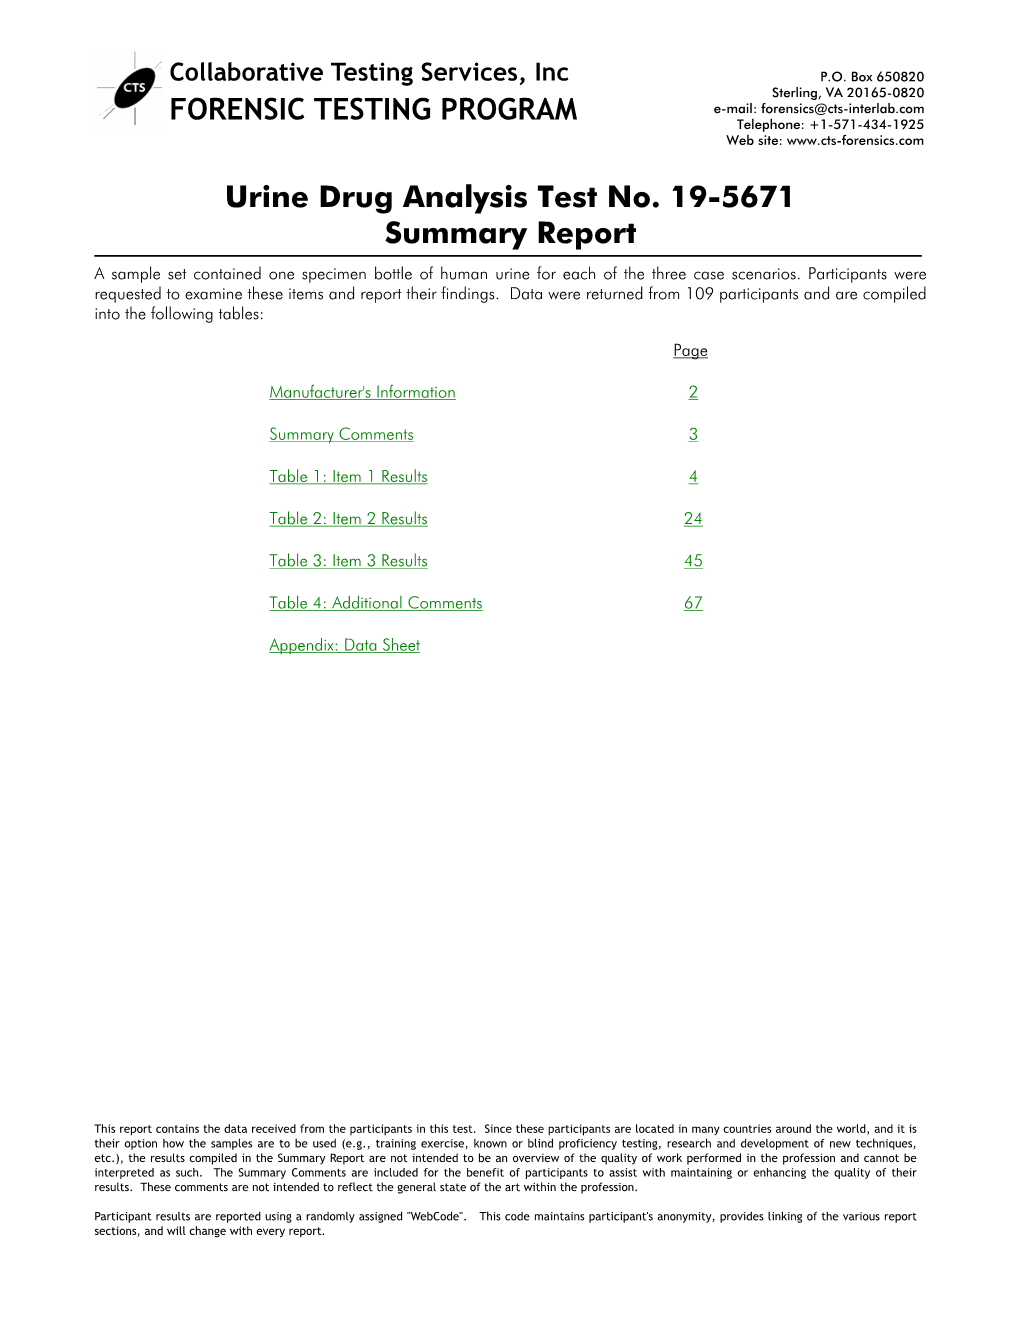 19-5671 Urine Drug Analysis